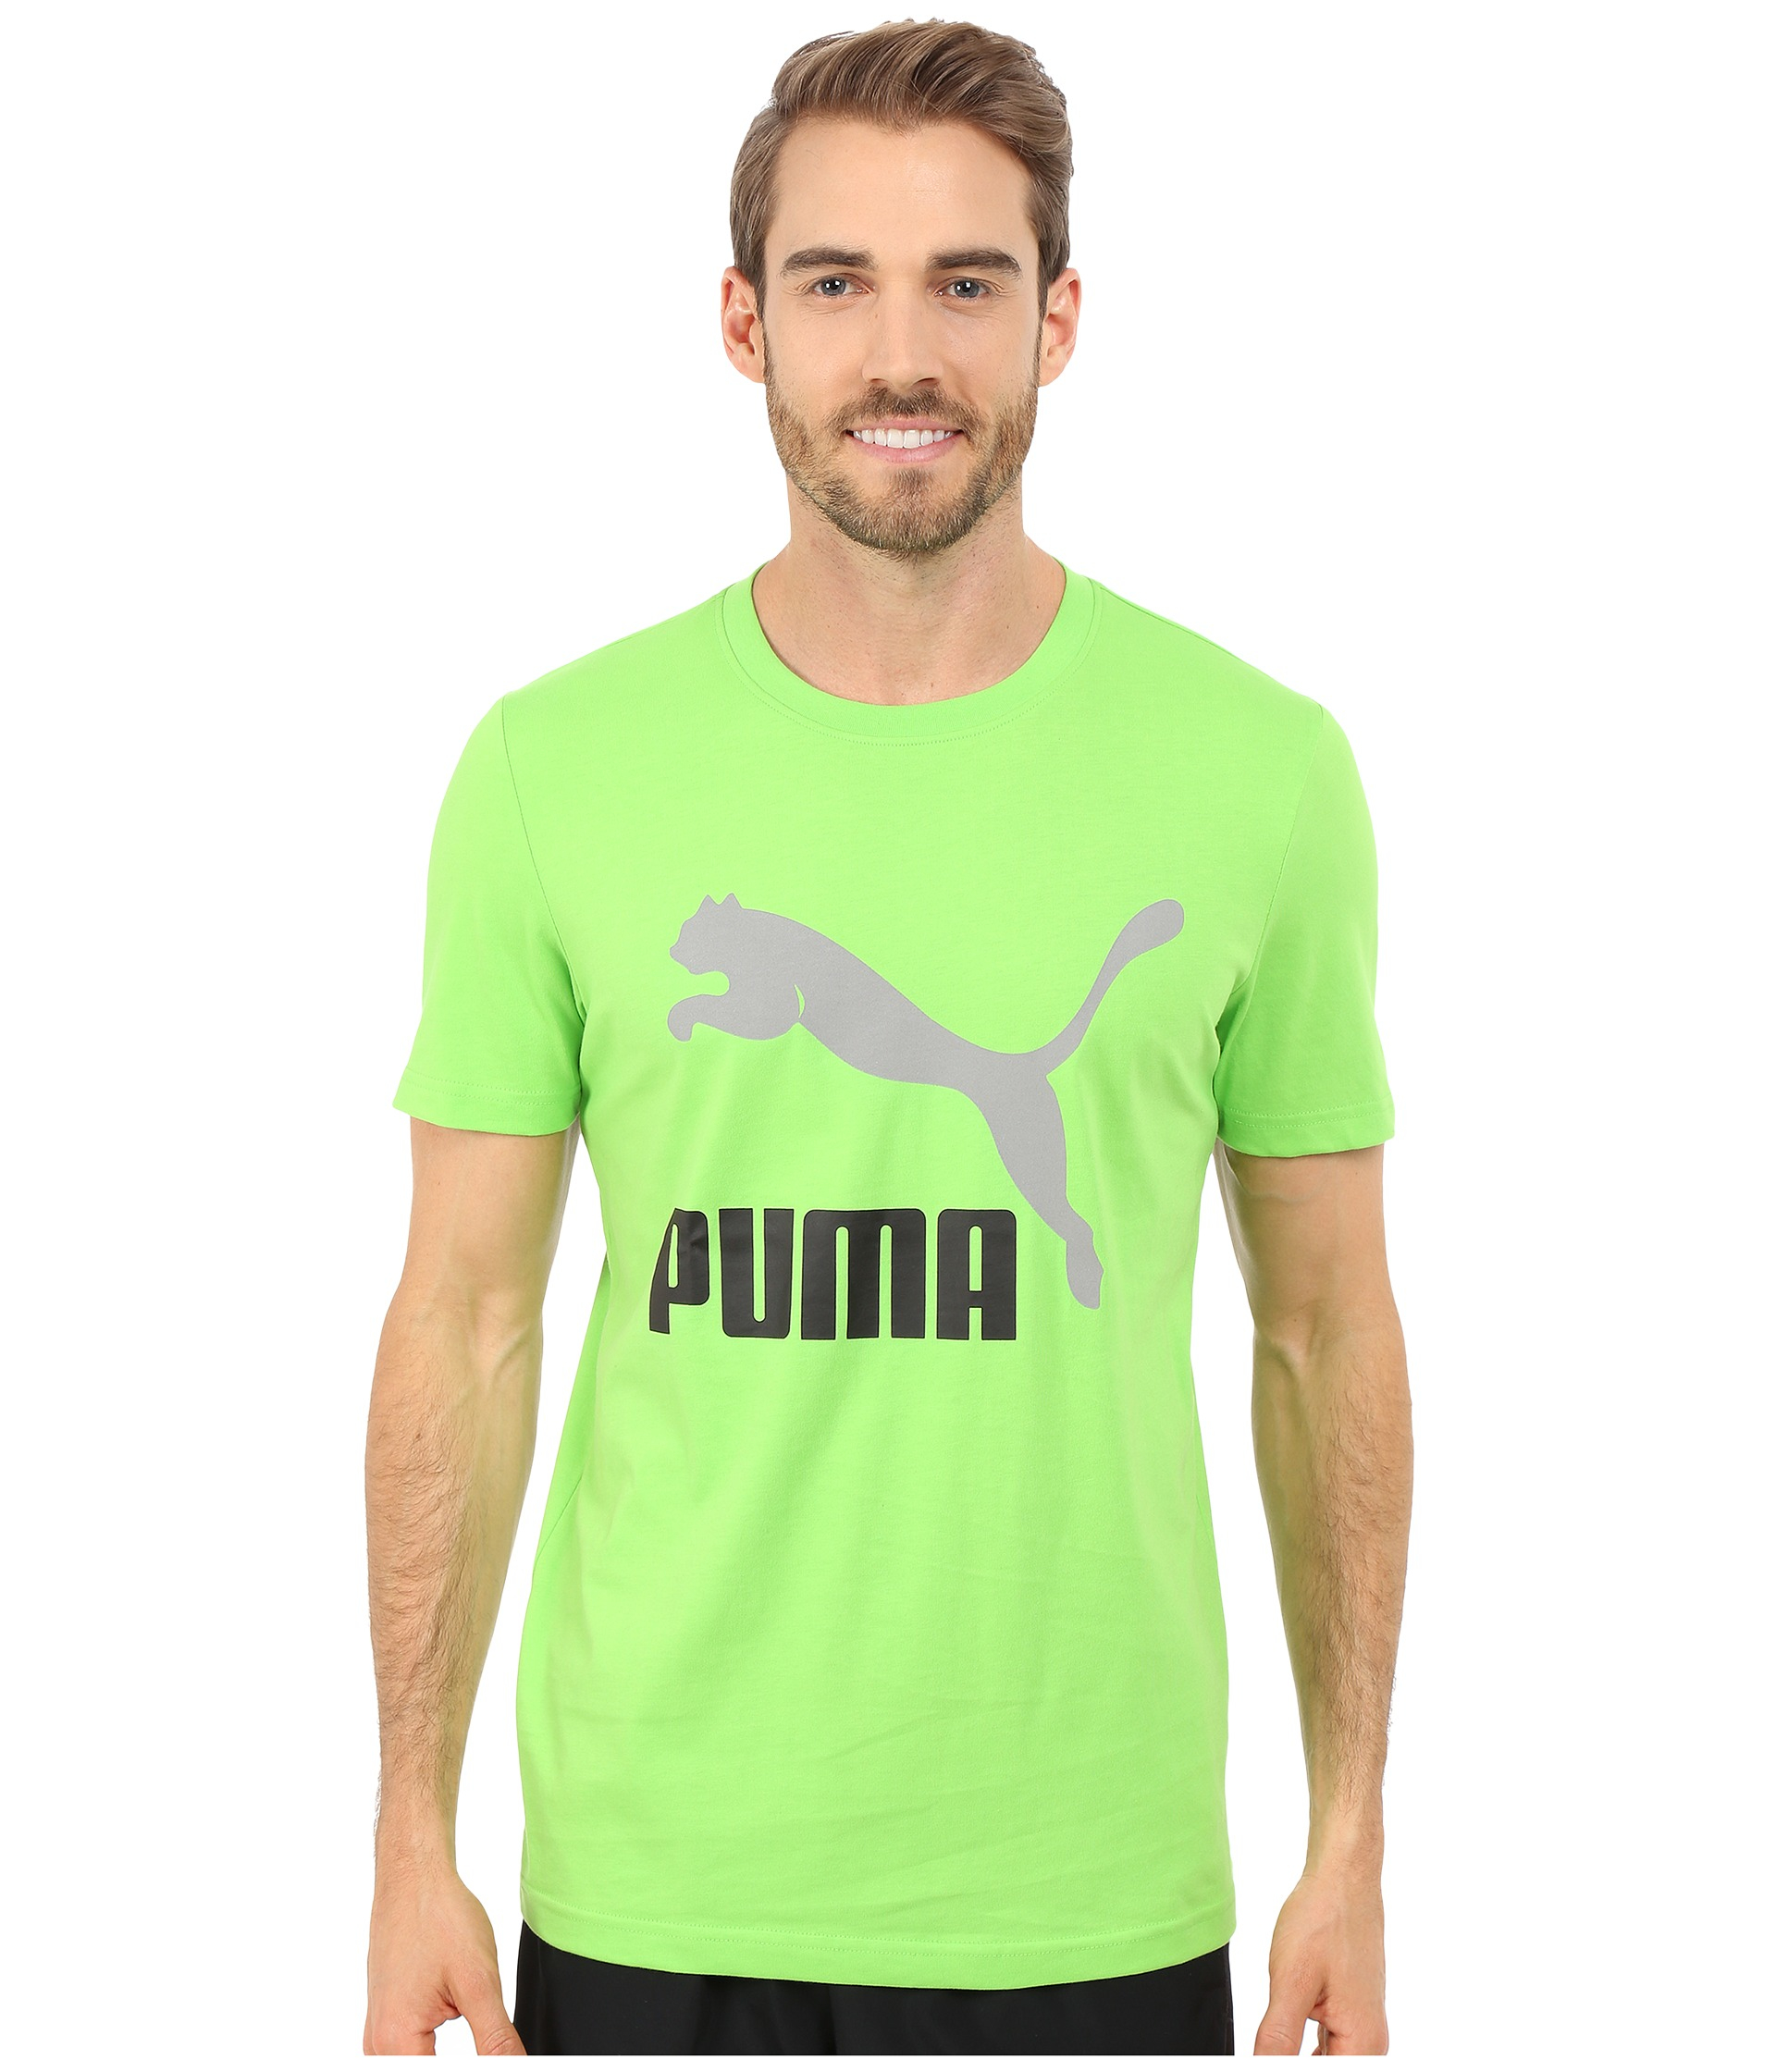 puma lime green shirt